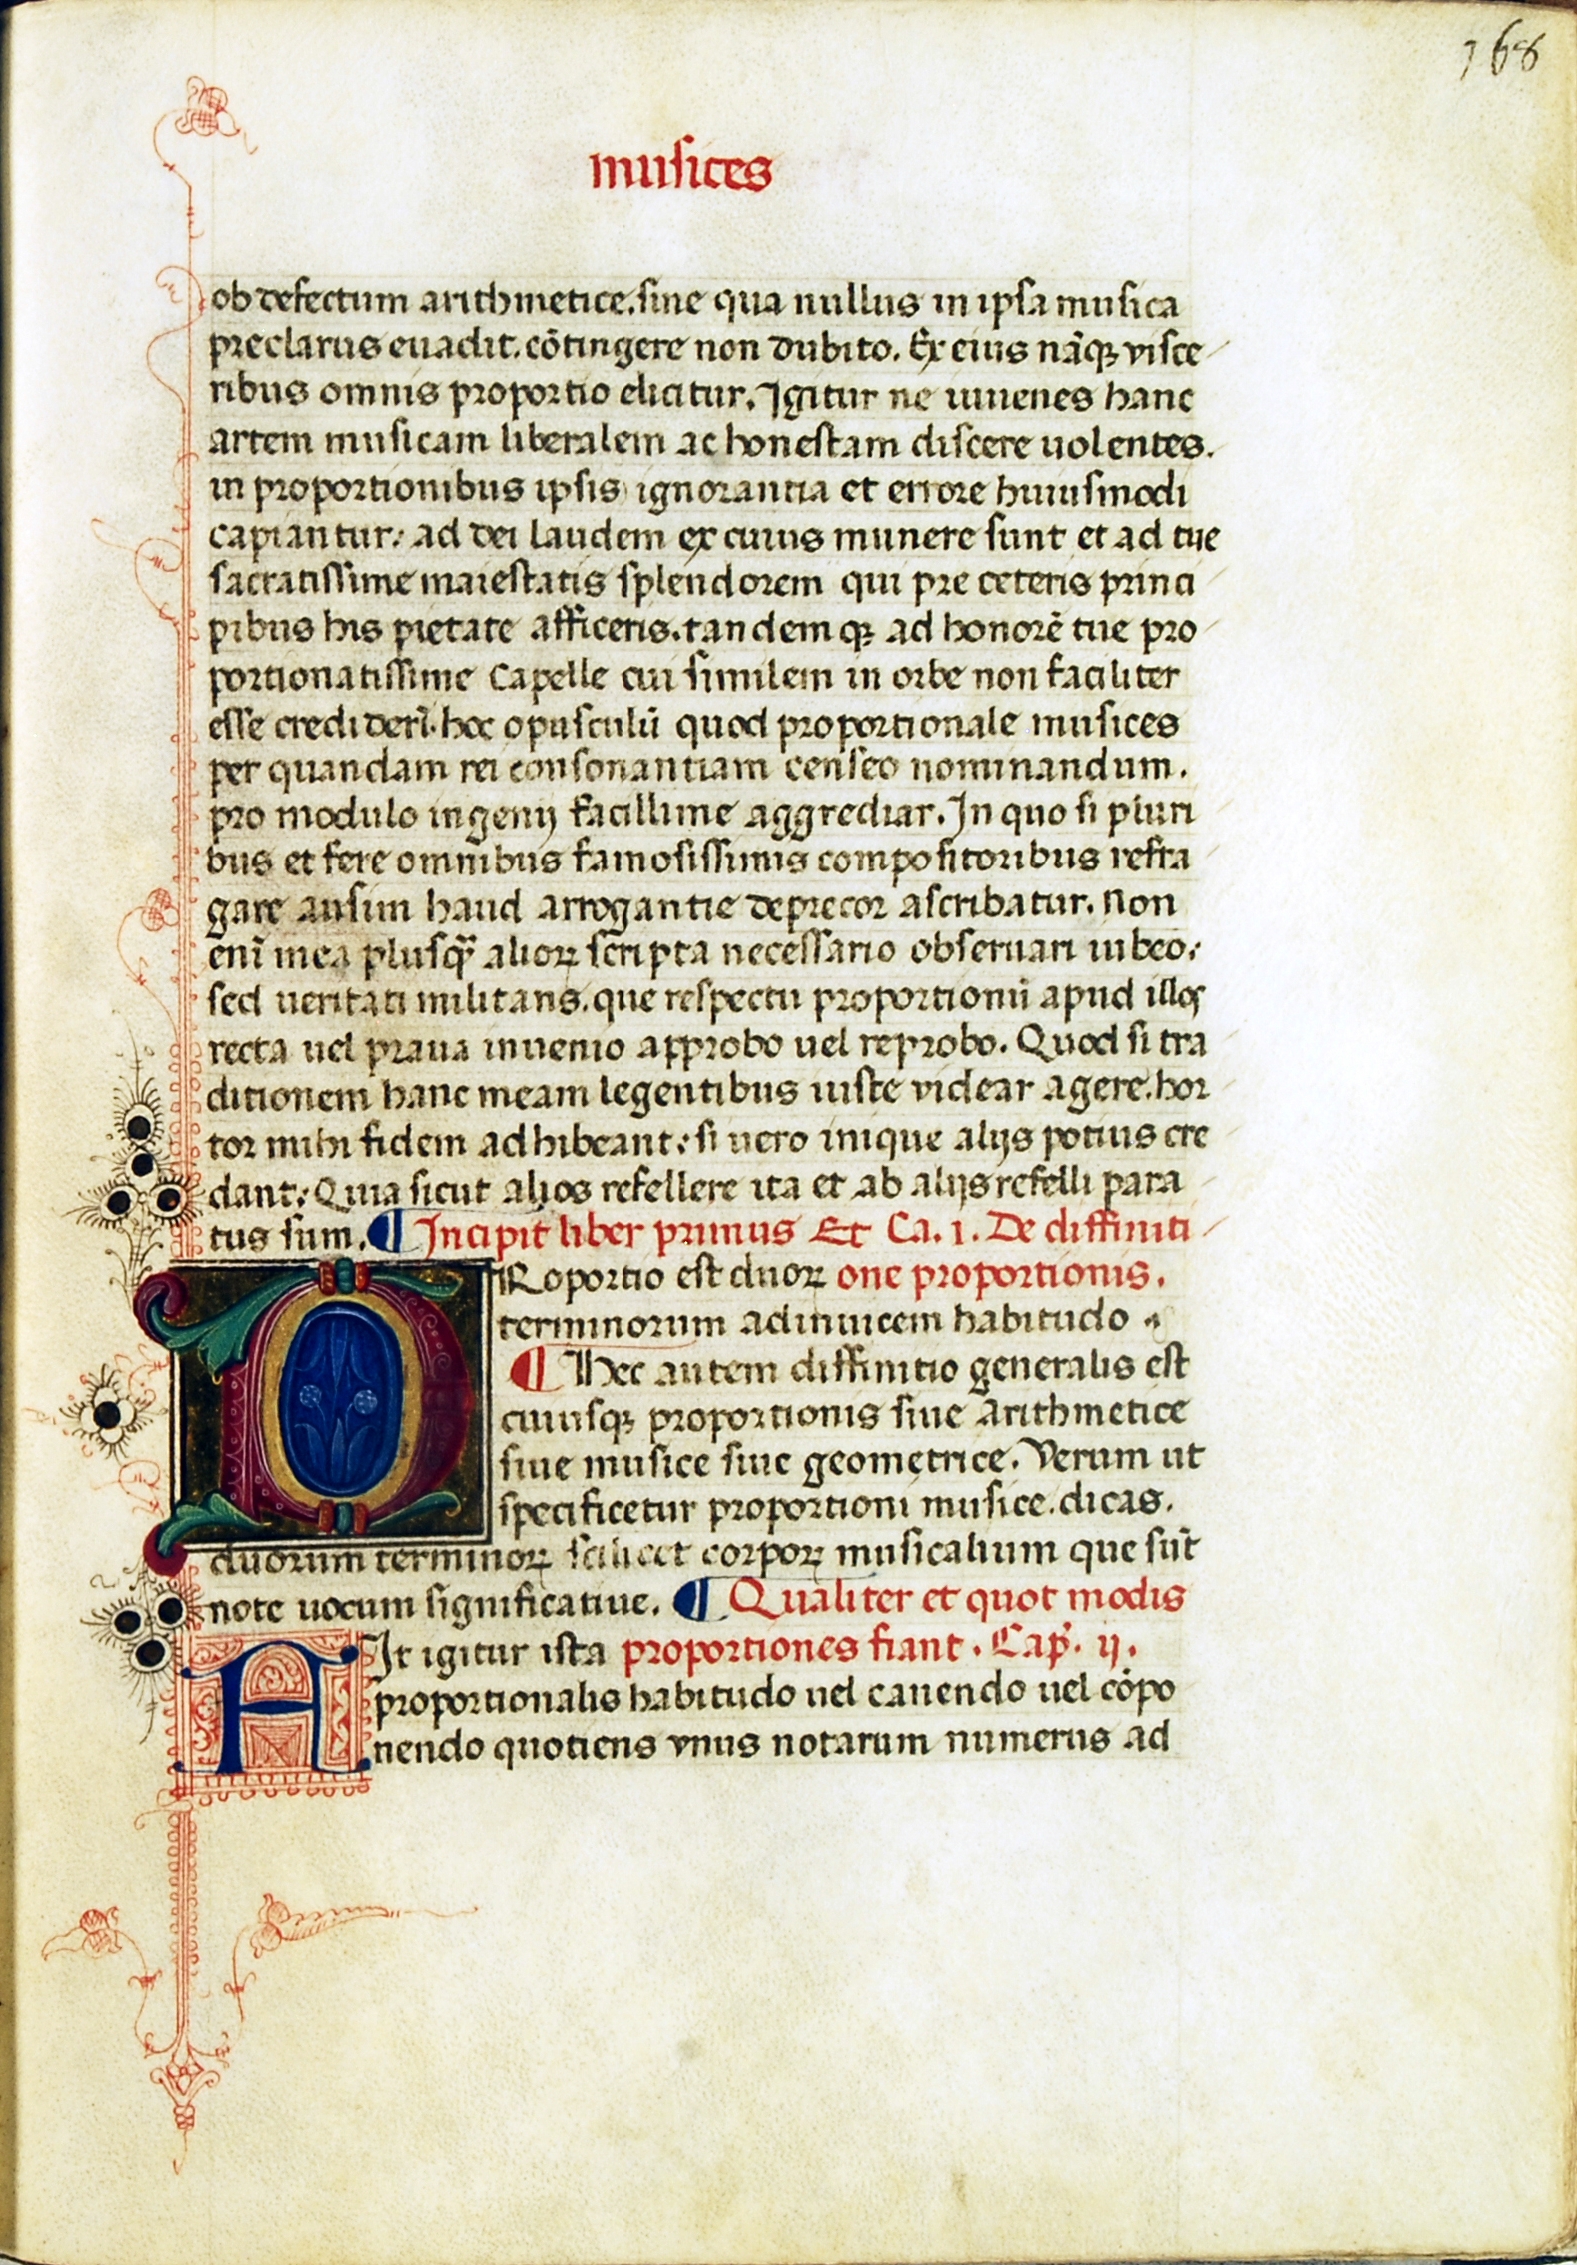 Bologna, Biblioteca Universitaria, MS 2573, fol. 167r. Source: Biblioteca Universitaria, Bologna.